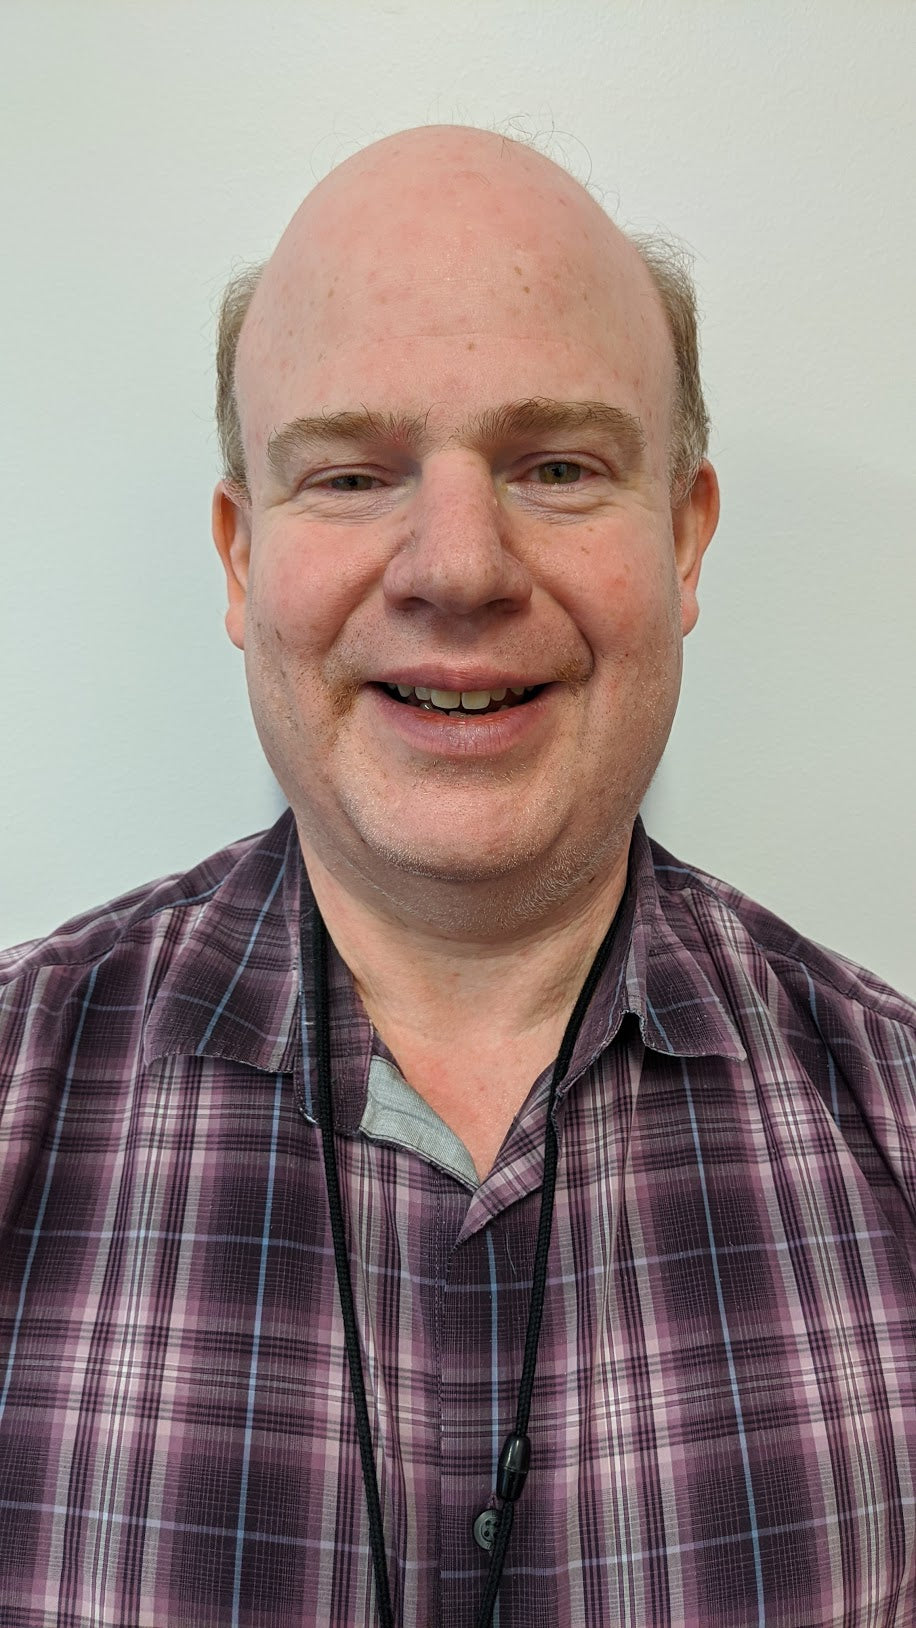 bald man smiling wearing a plaid shirt